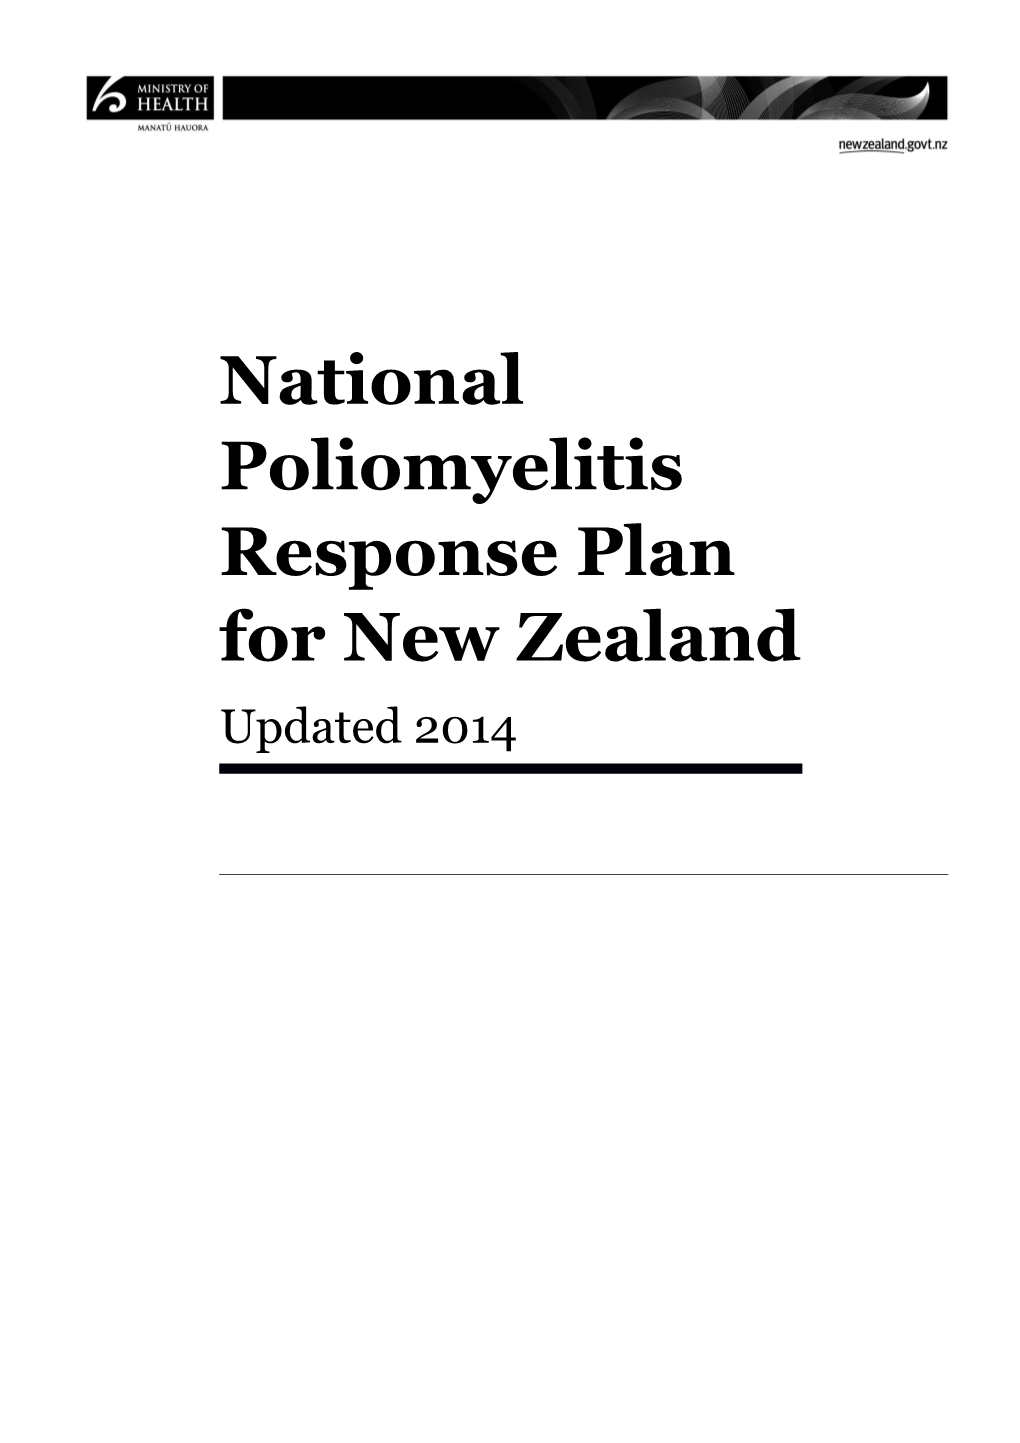 National Poliomyelitis Response Plan for New Zealand